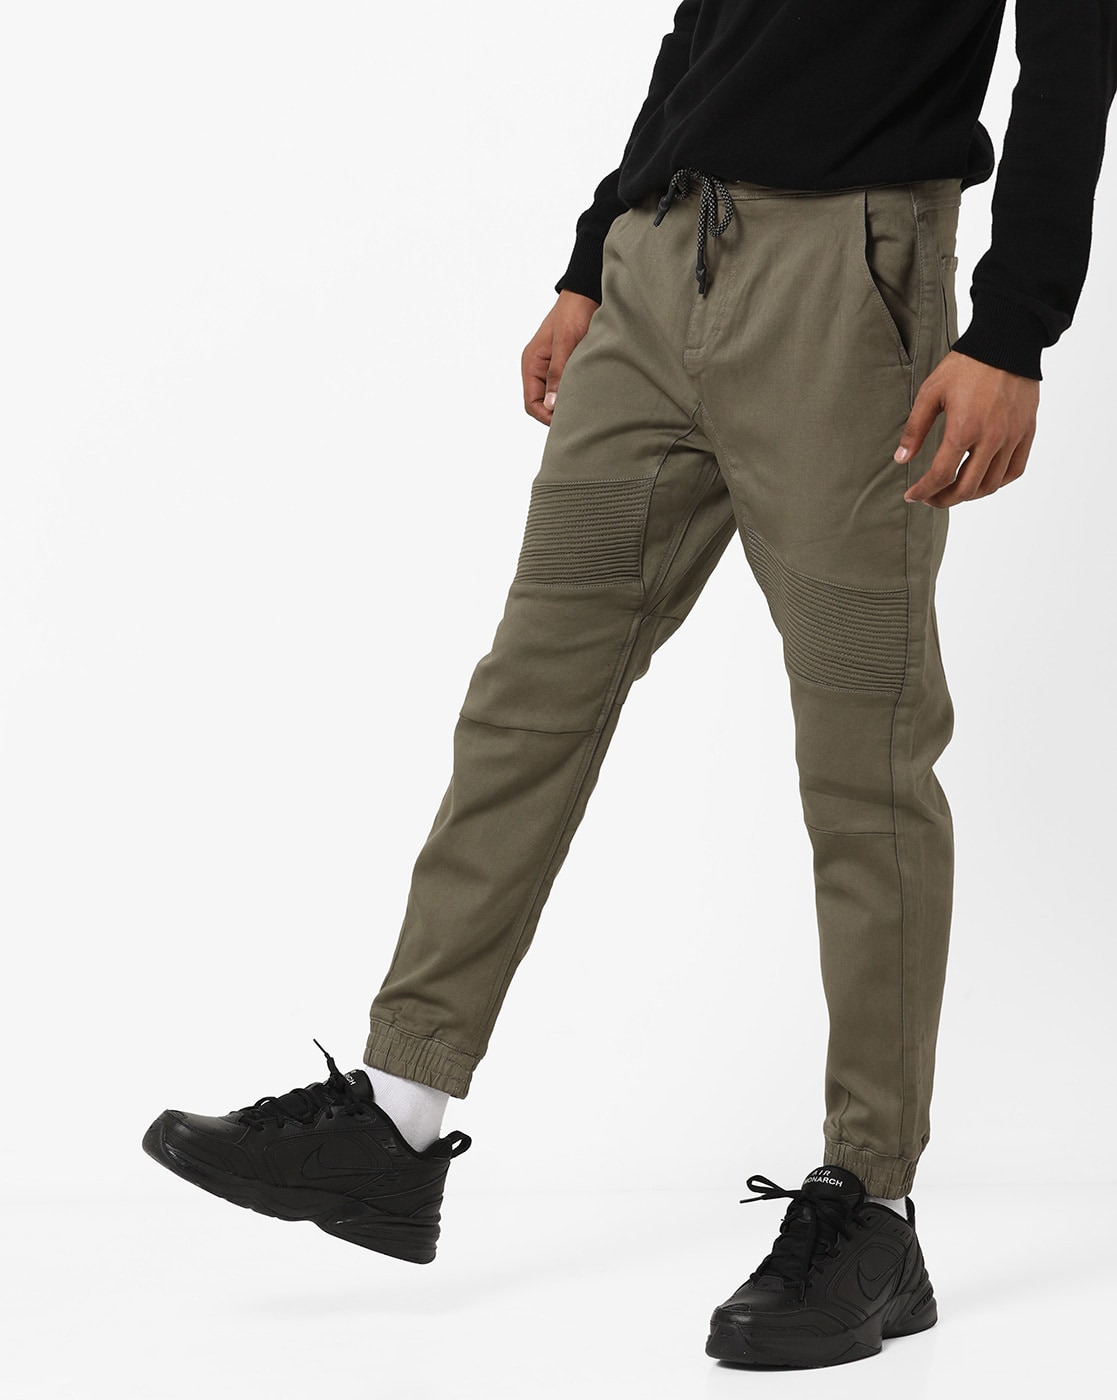 Buy Olive Trousers & Pants Men by DNMX | Ajio.com